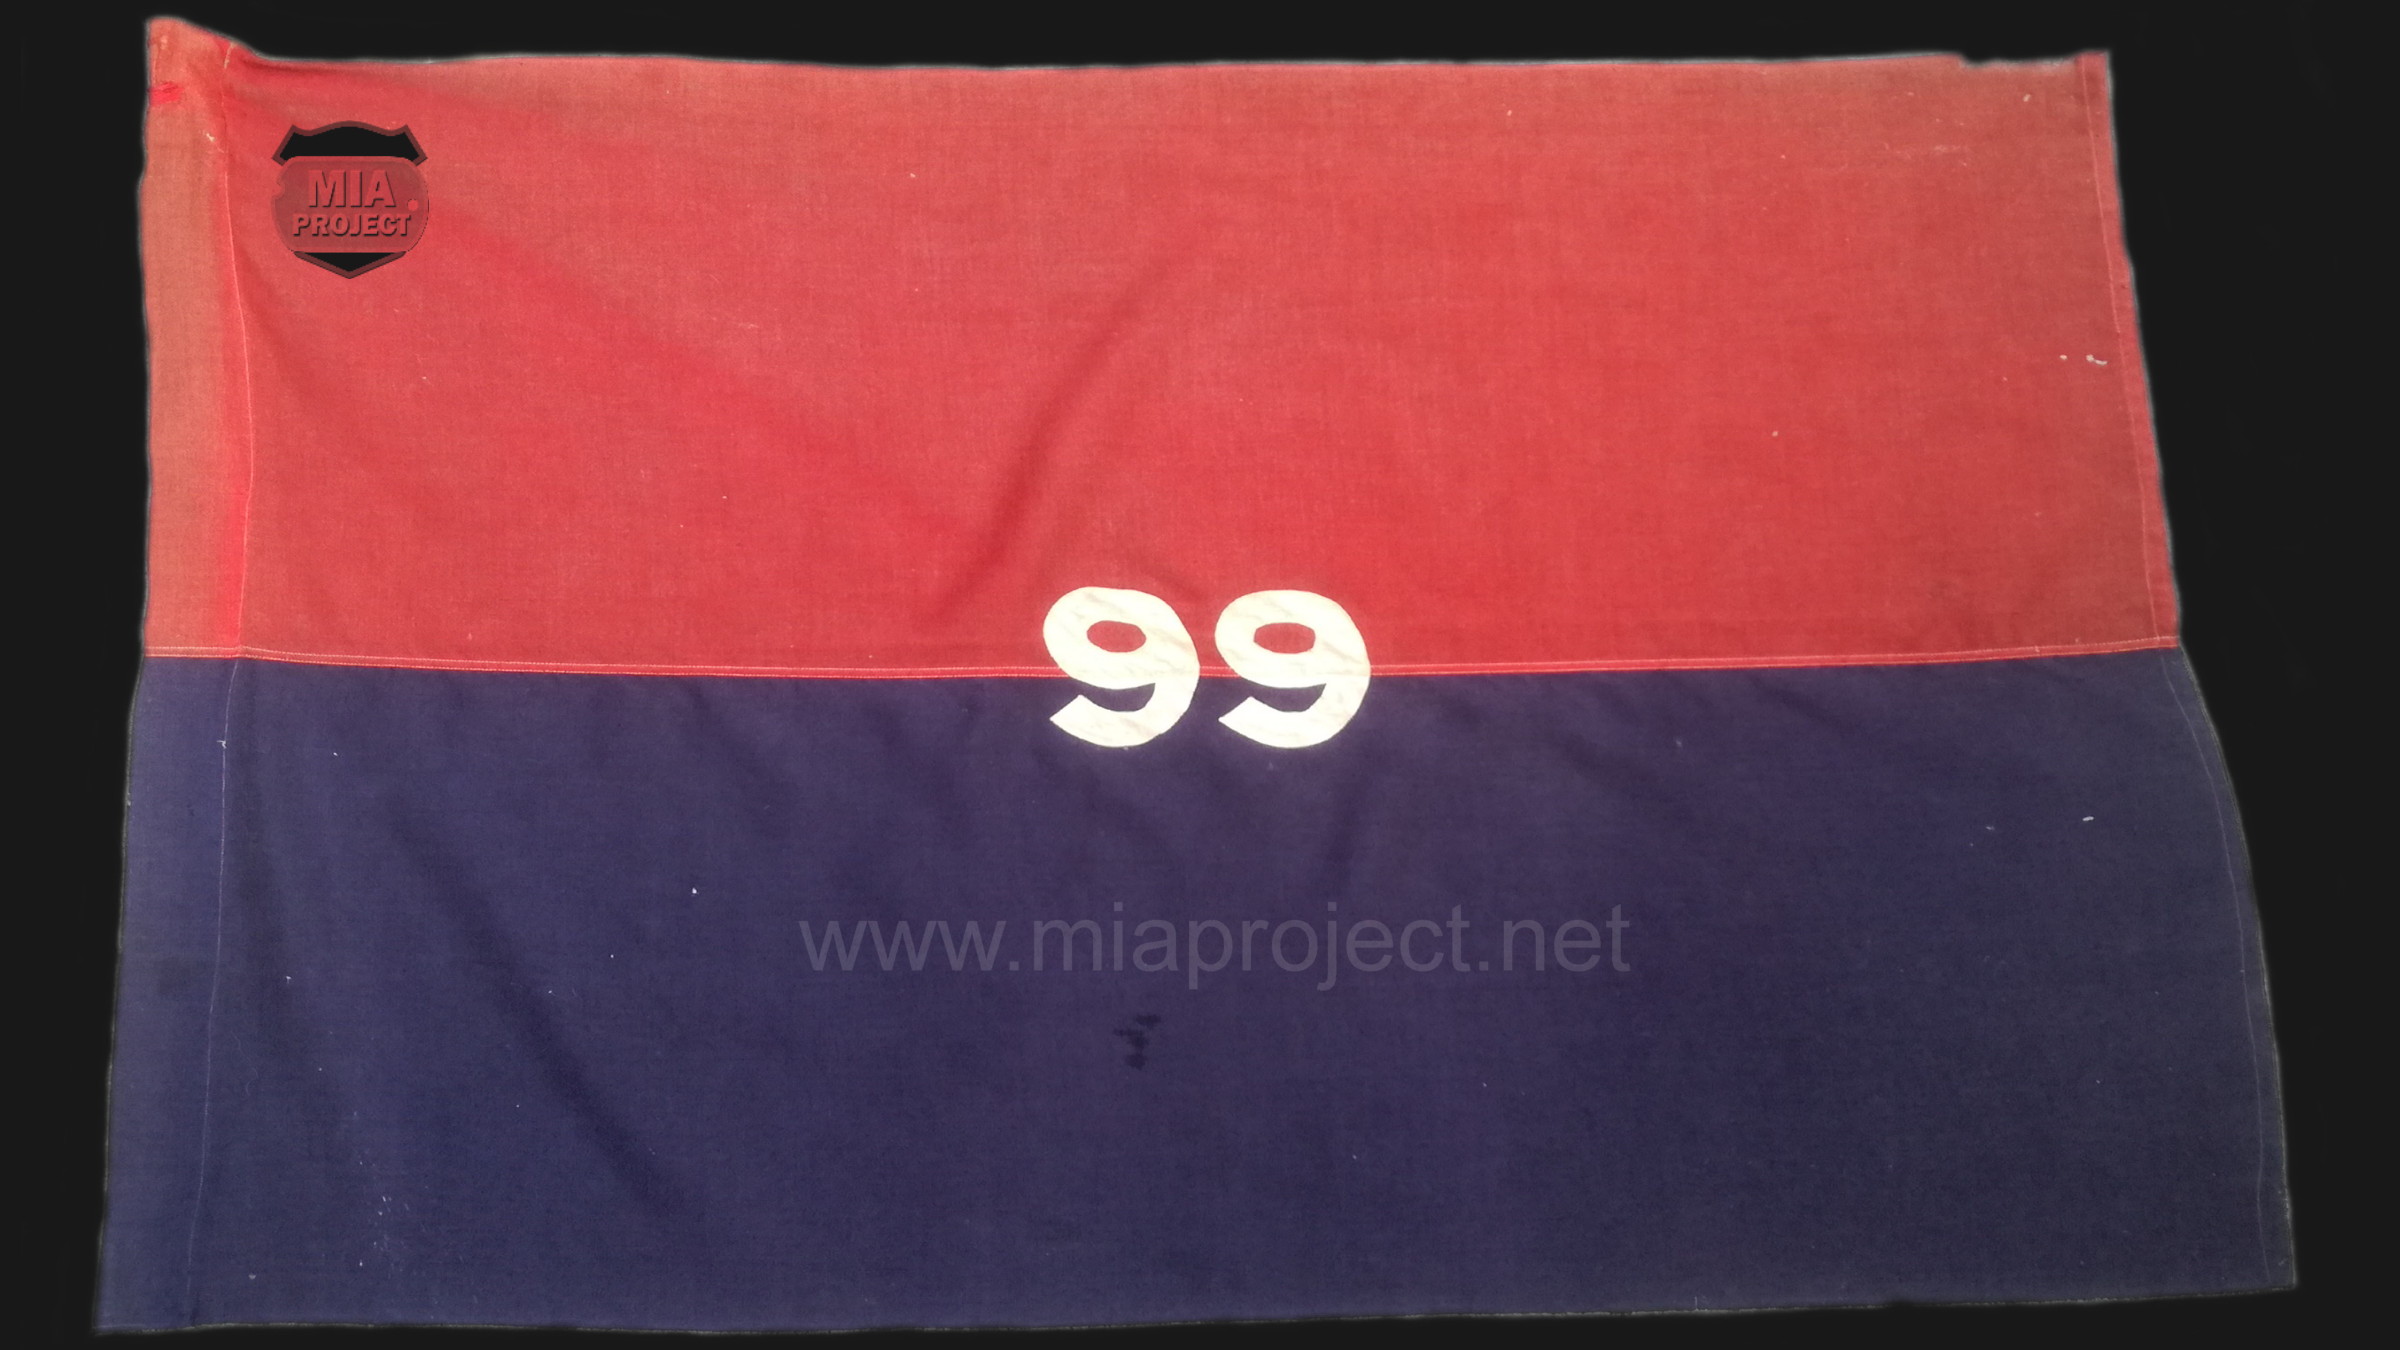 99 Flag edited